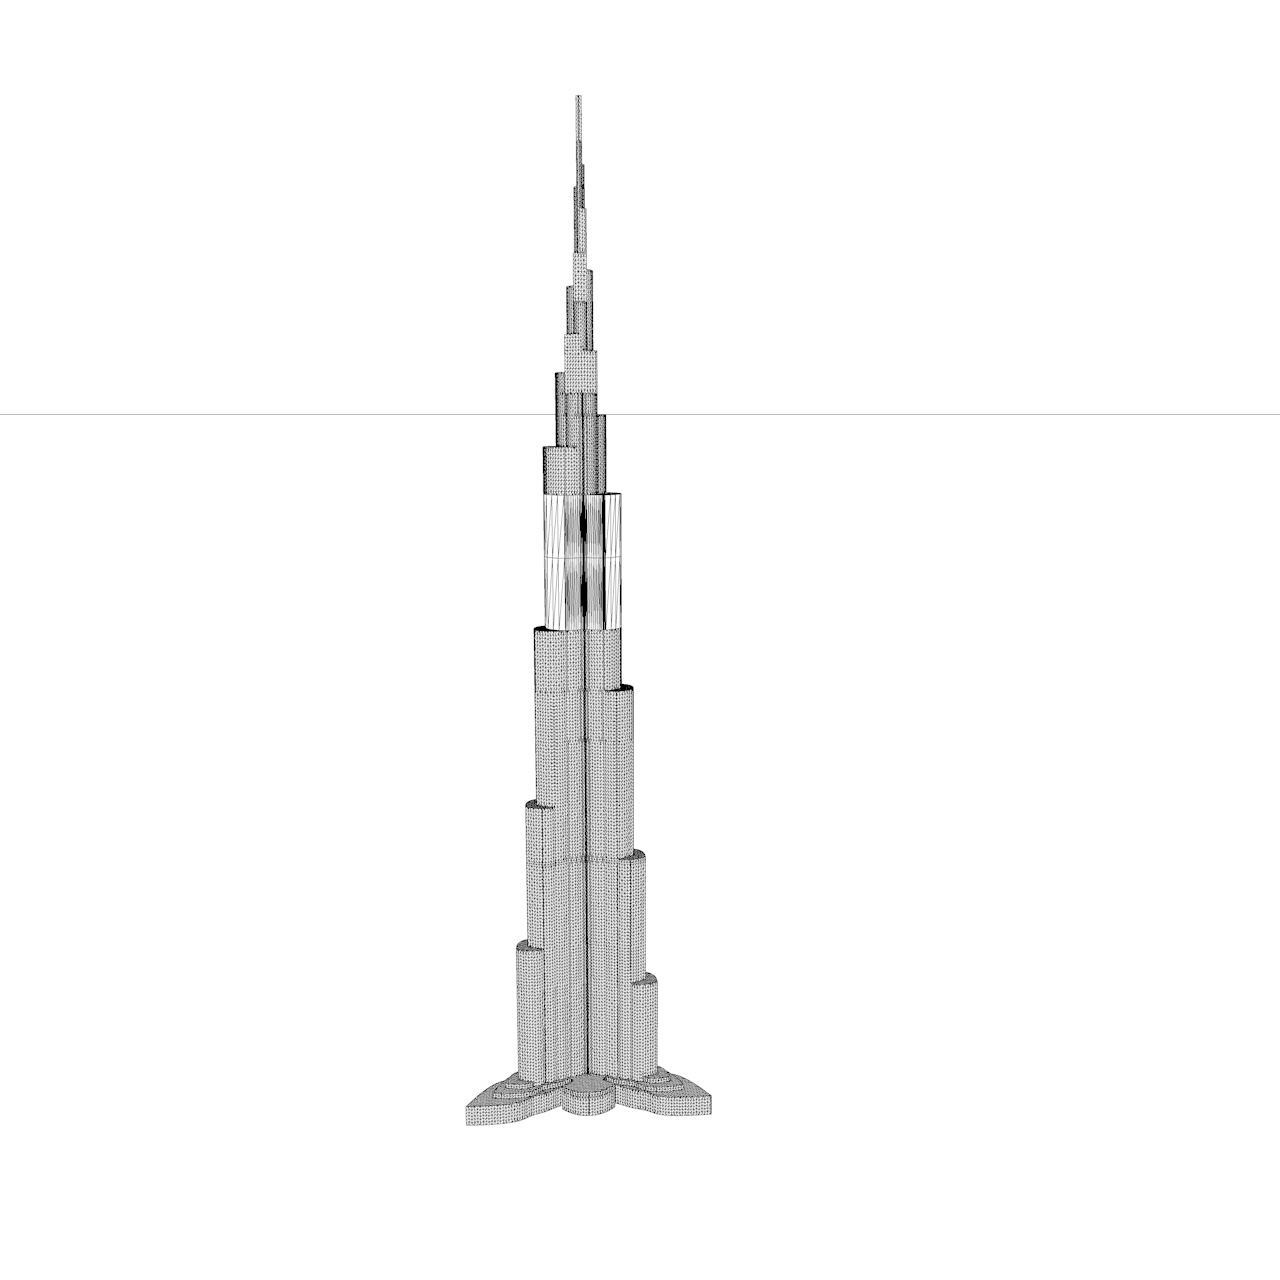 Modelo de impresión en 3d del edificio Burj-Khalifa